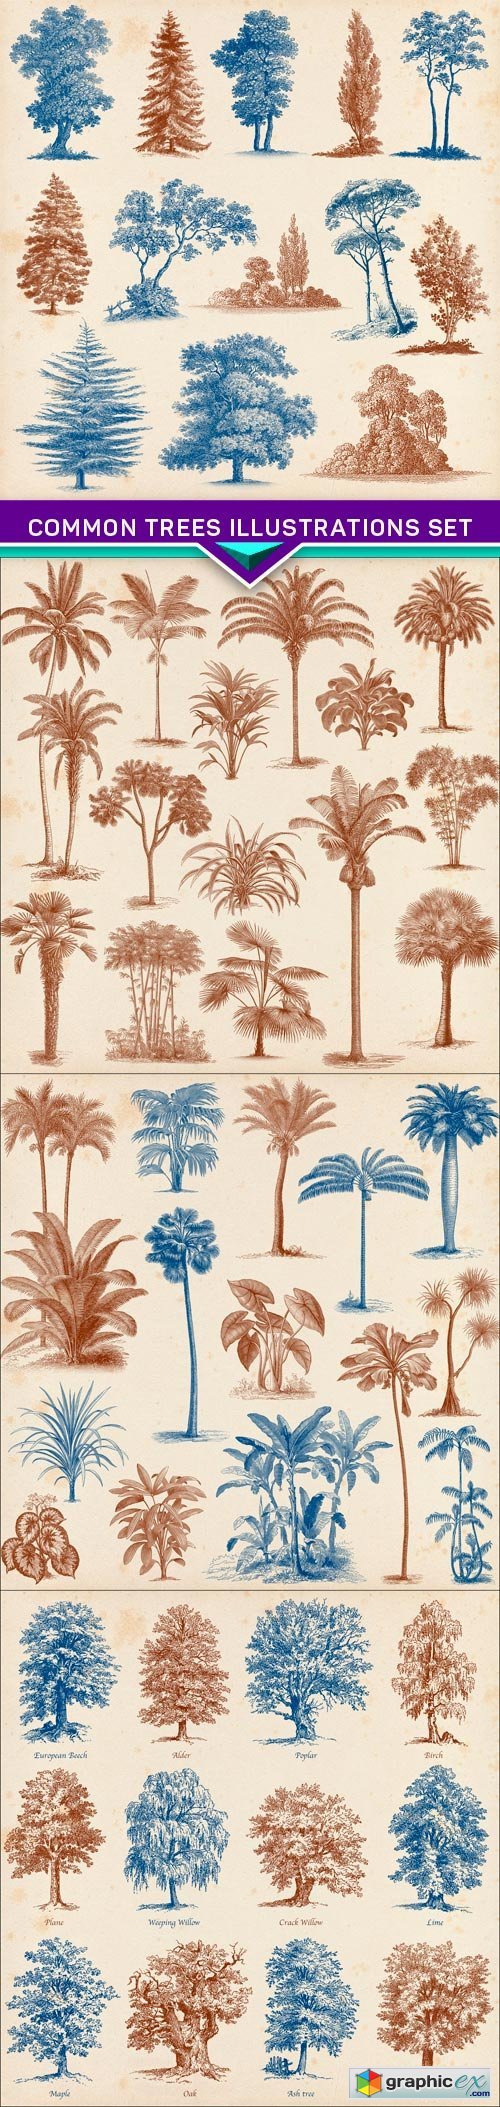 Common trees illustrations set 4X JPEG